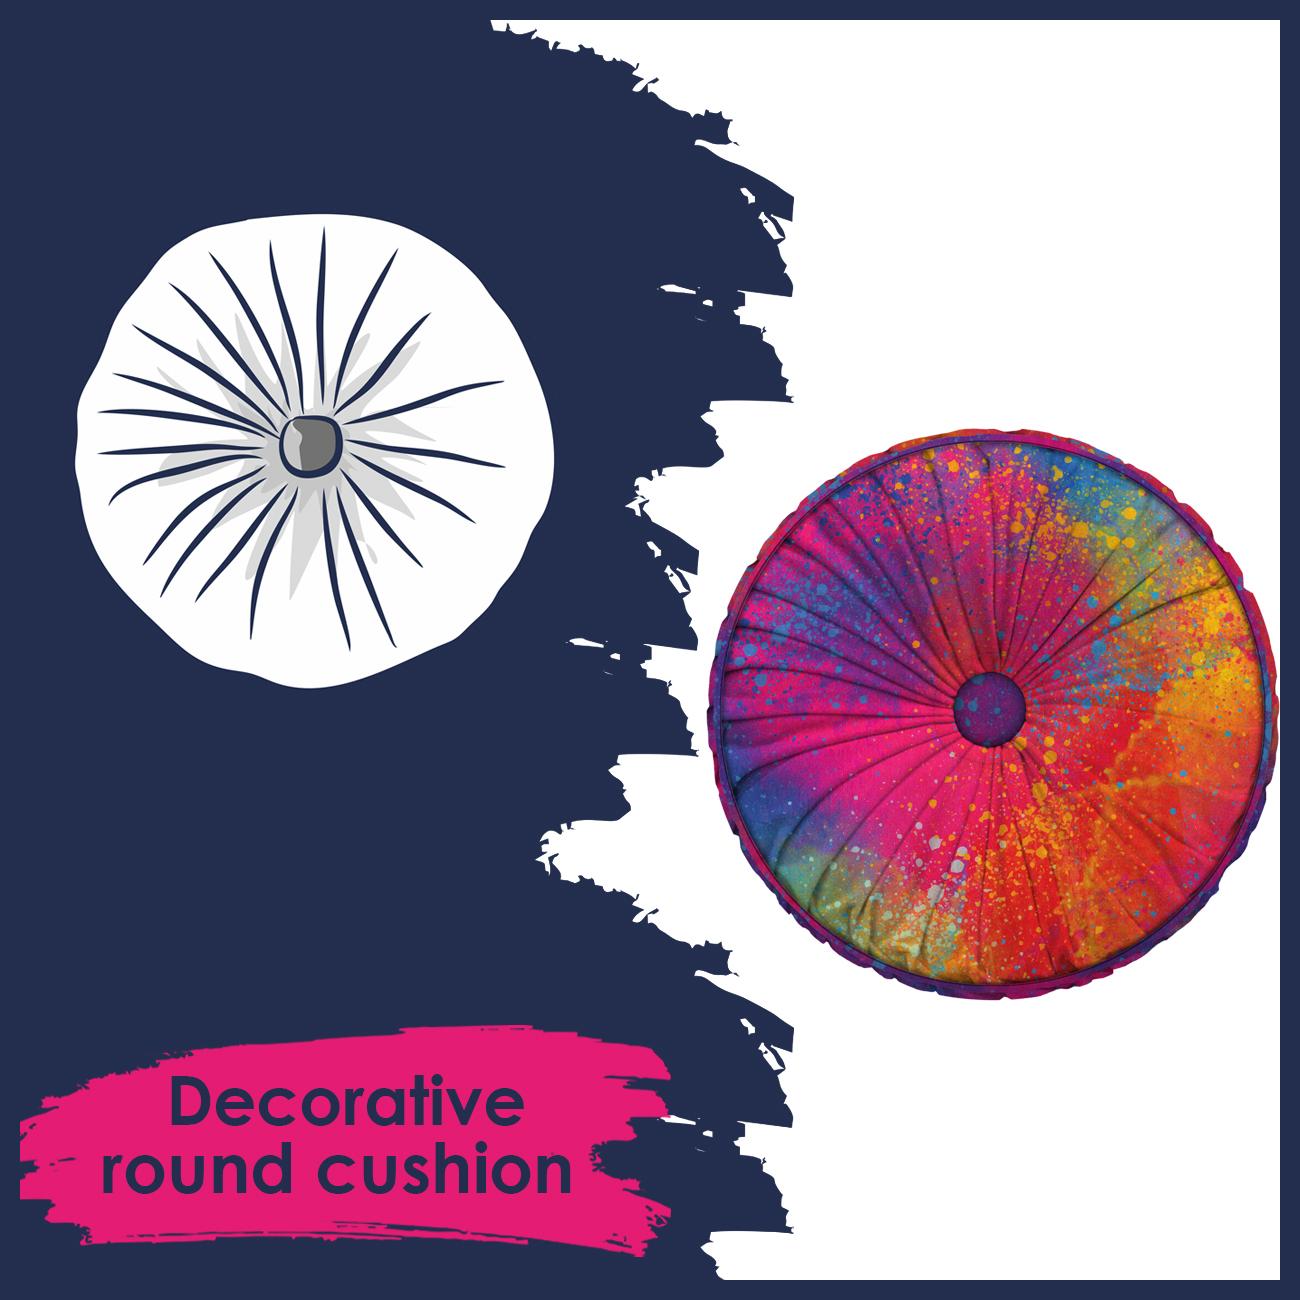 Decorative round cushion